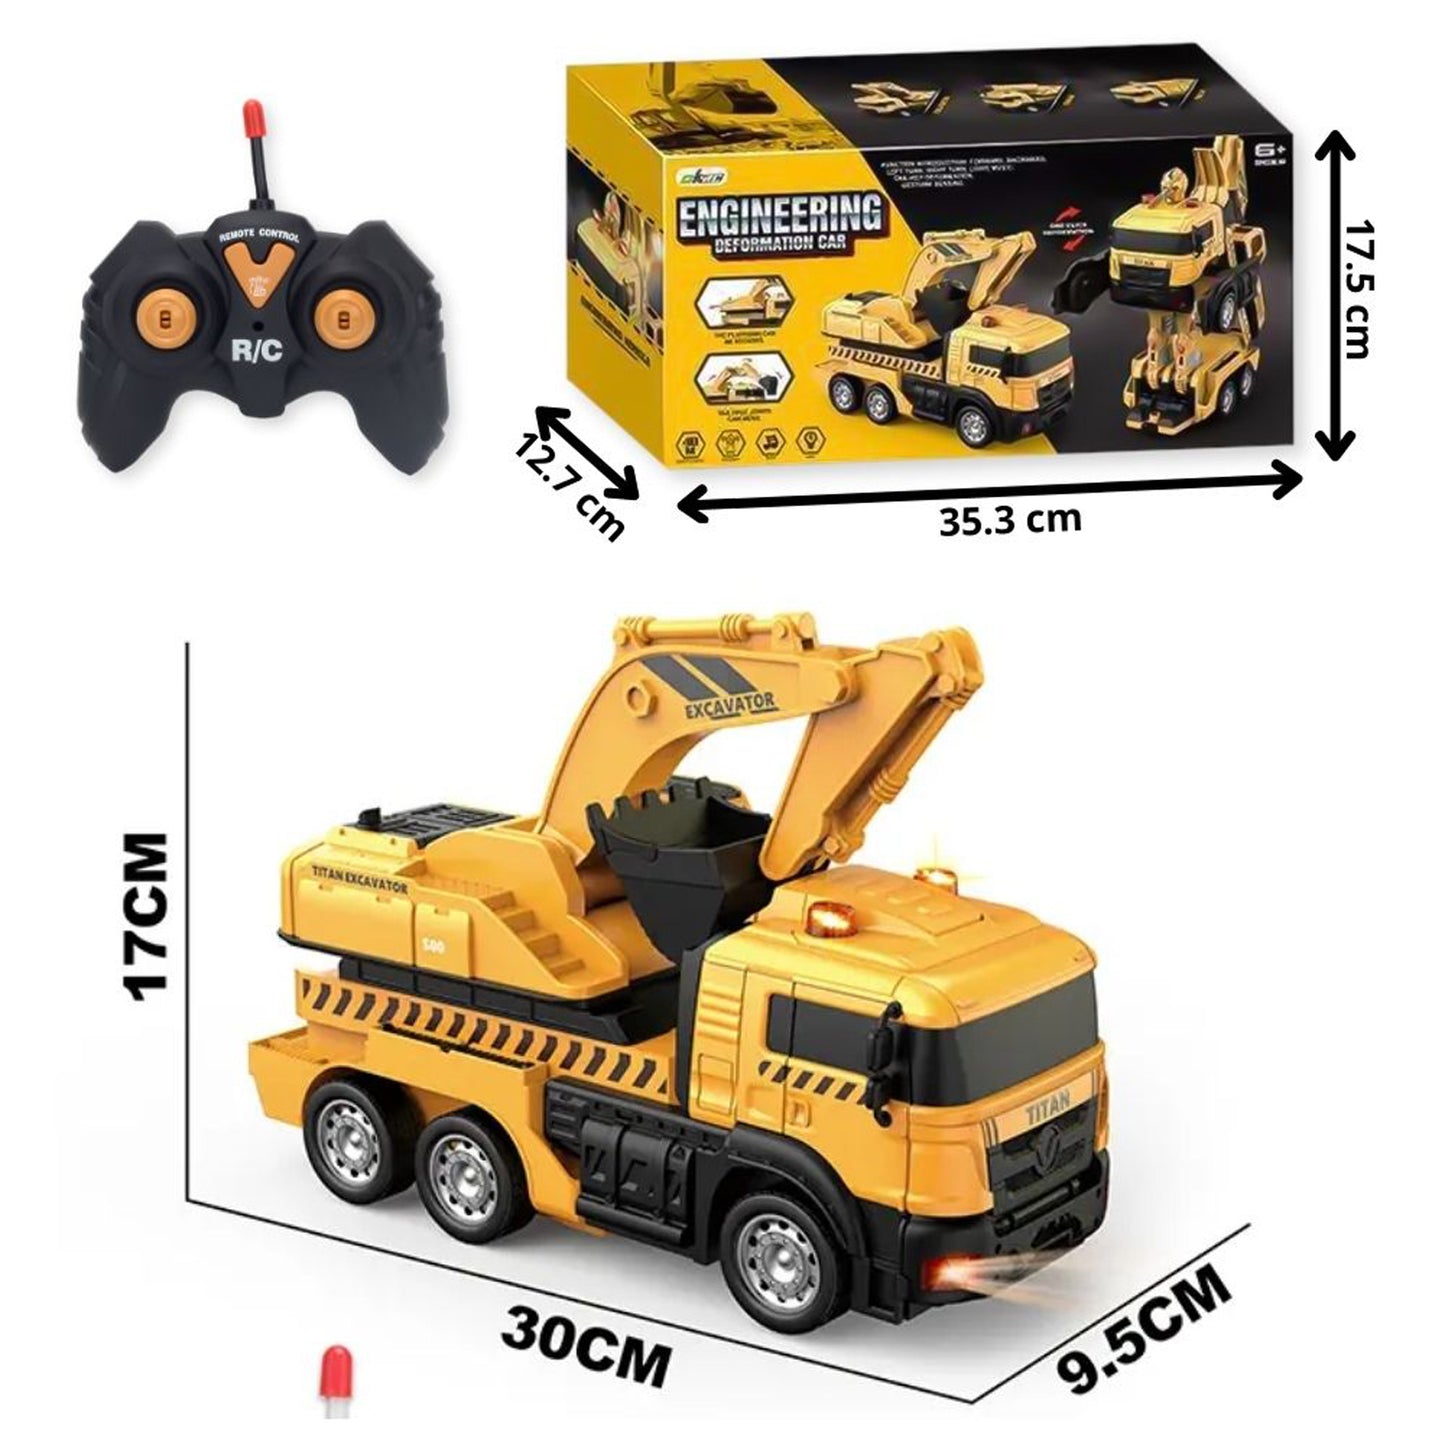 FITTO Remote Control Excavator Toy